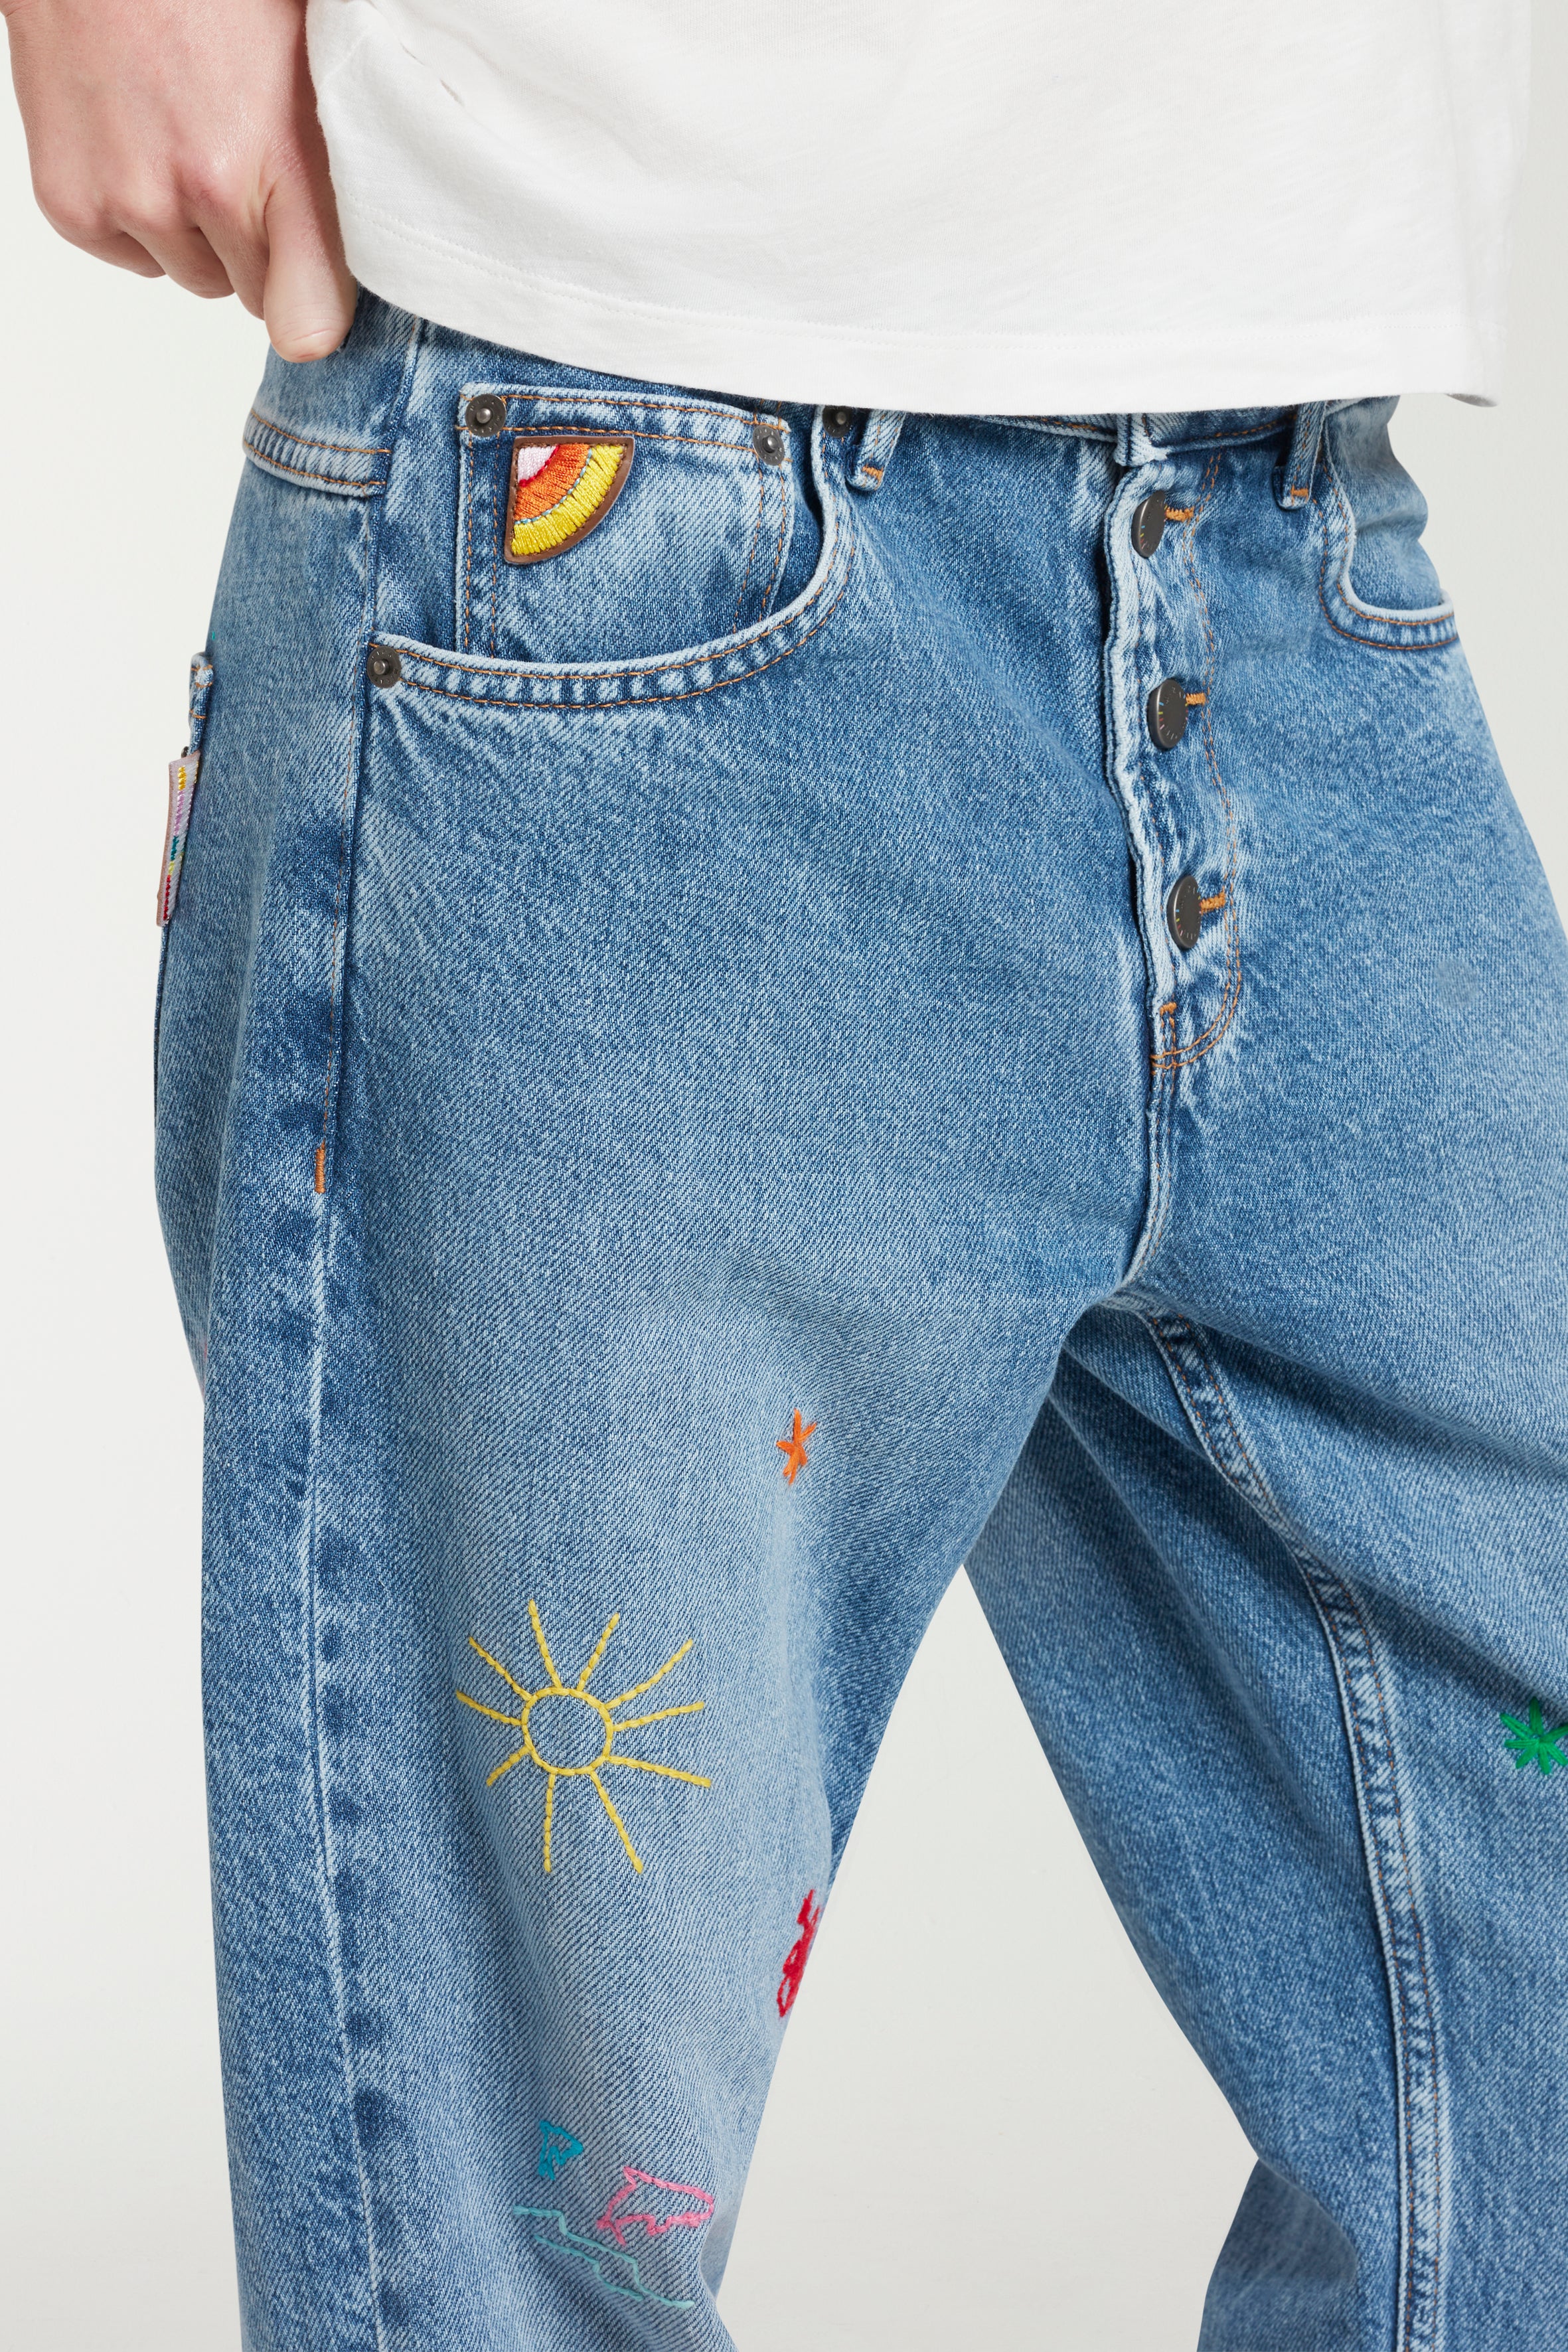 Denim Embroidered Jeans 